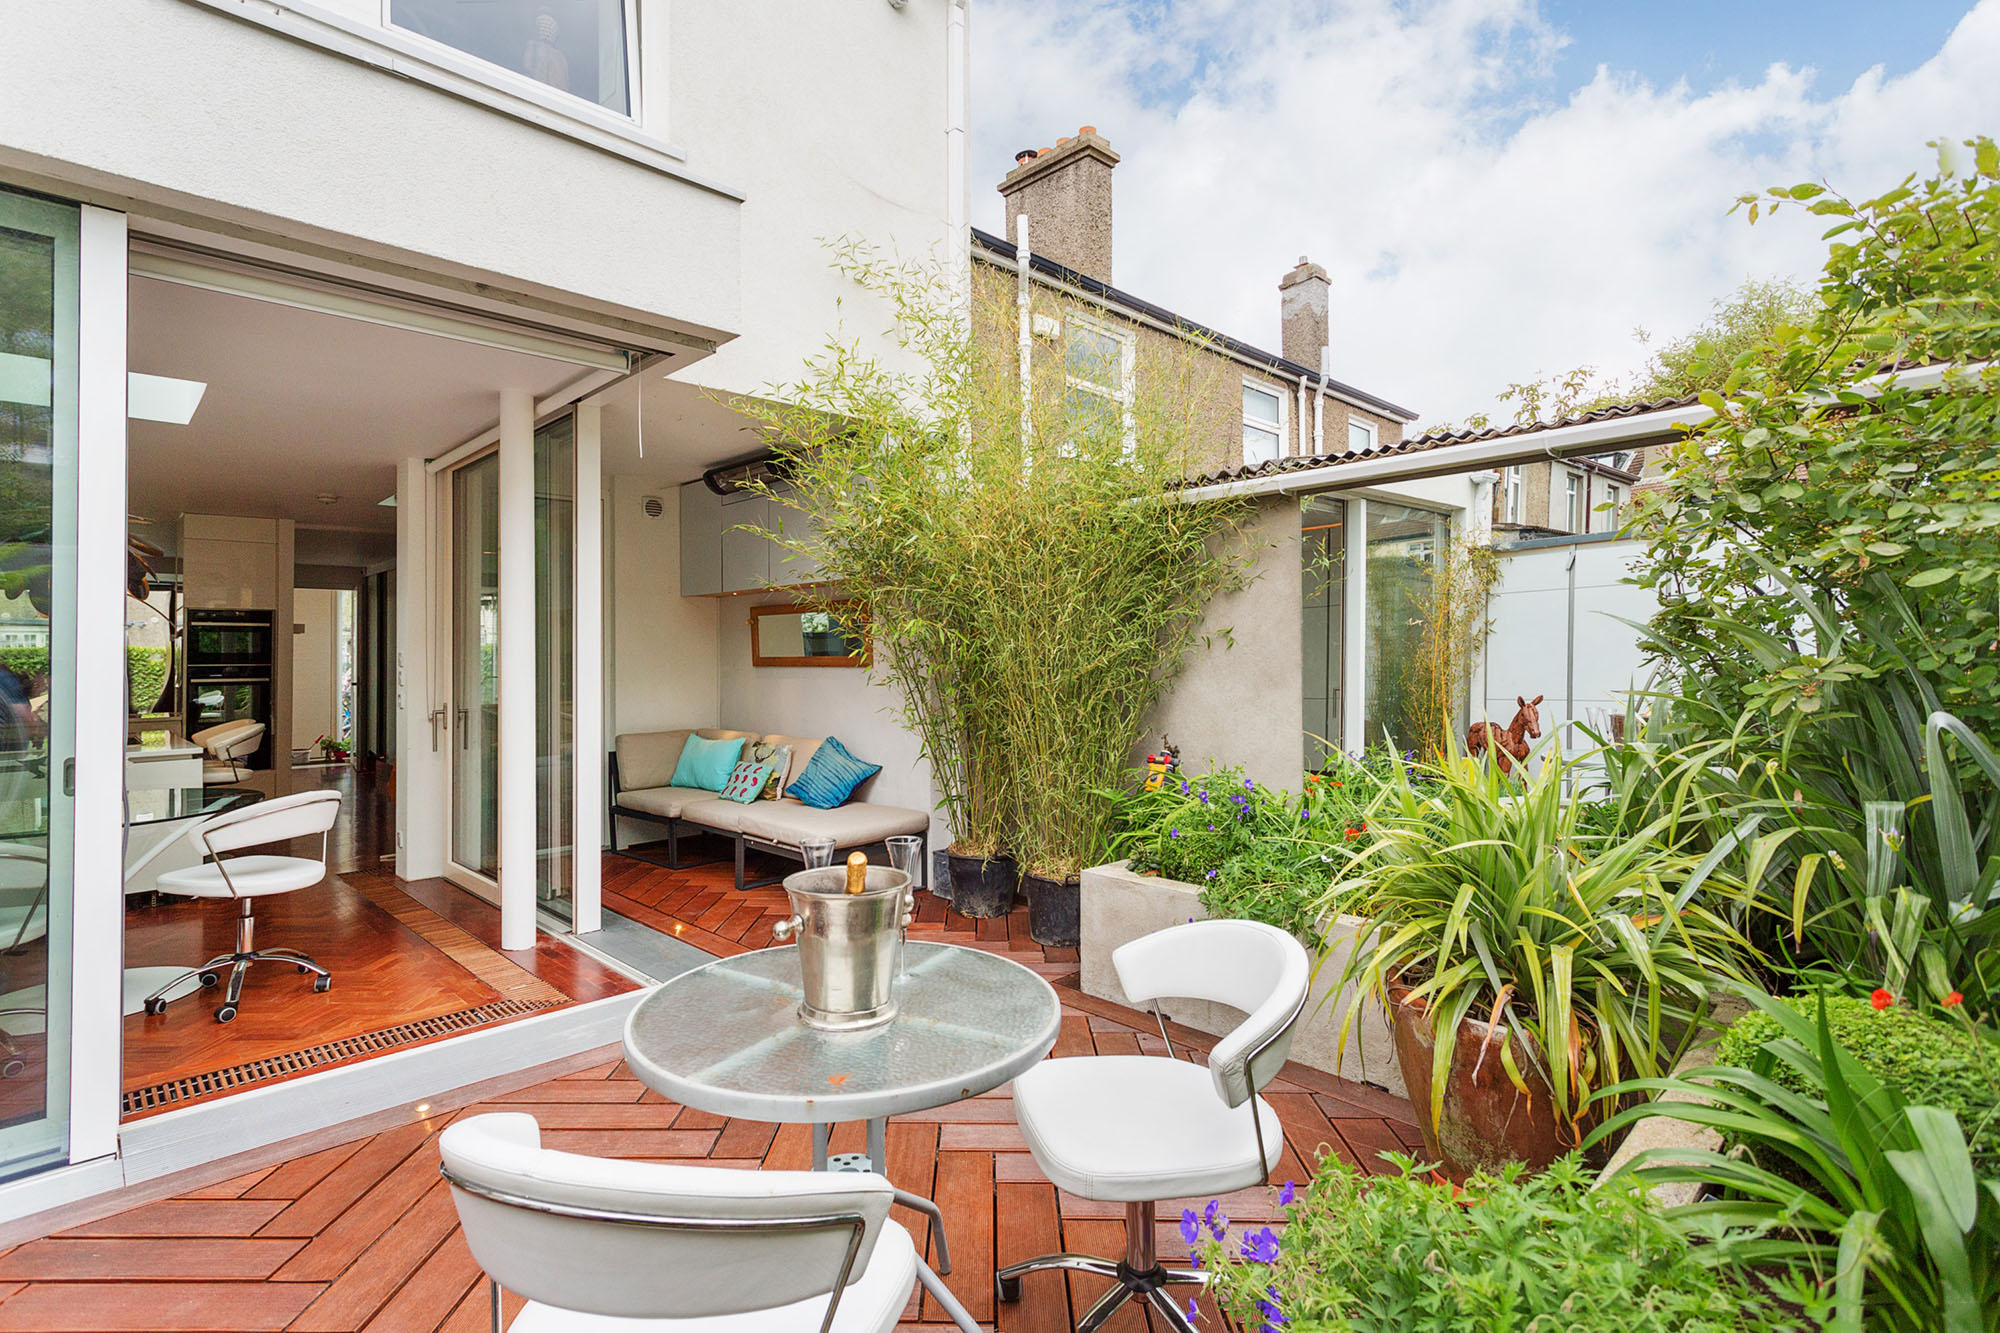 St Paul's Terrace : Five dazzling homes for sale in Dublin